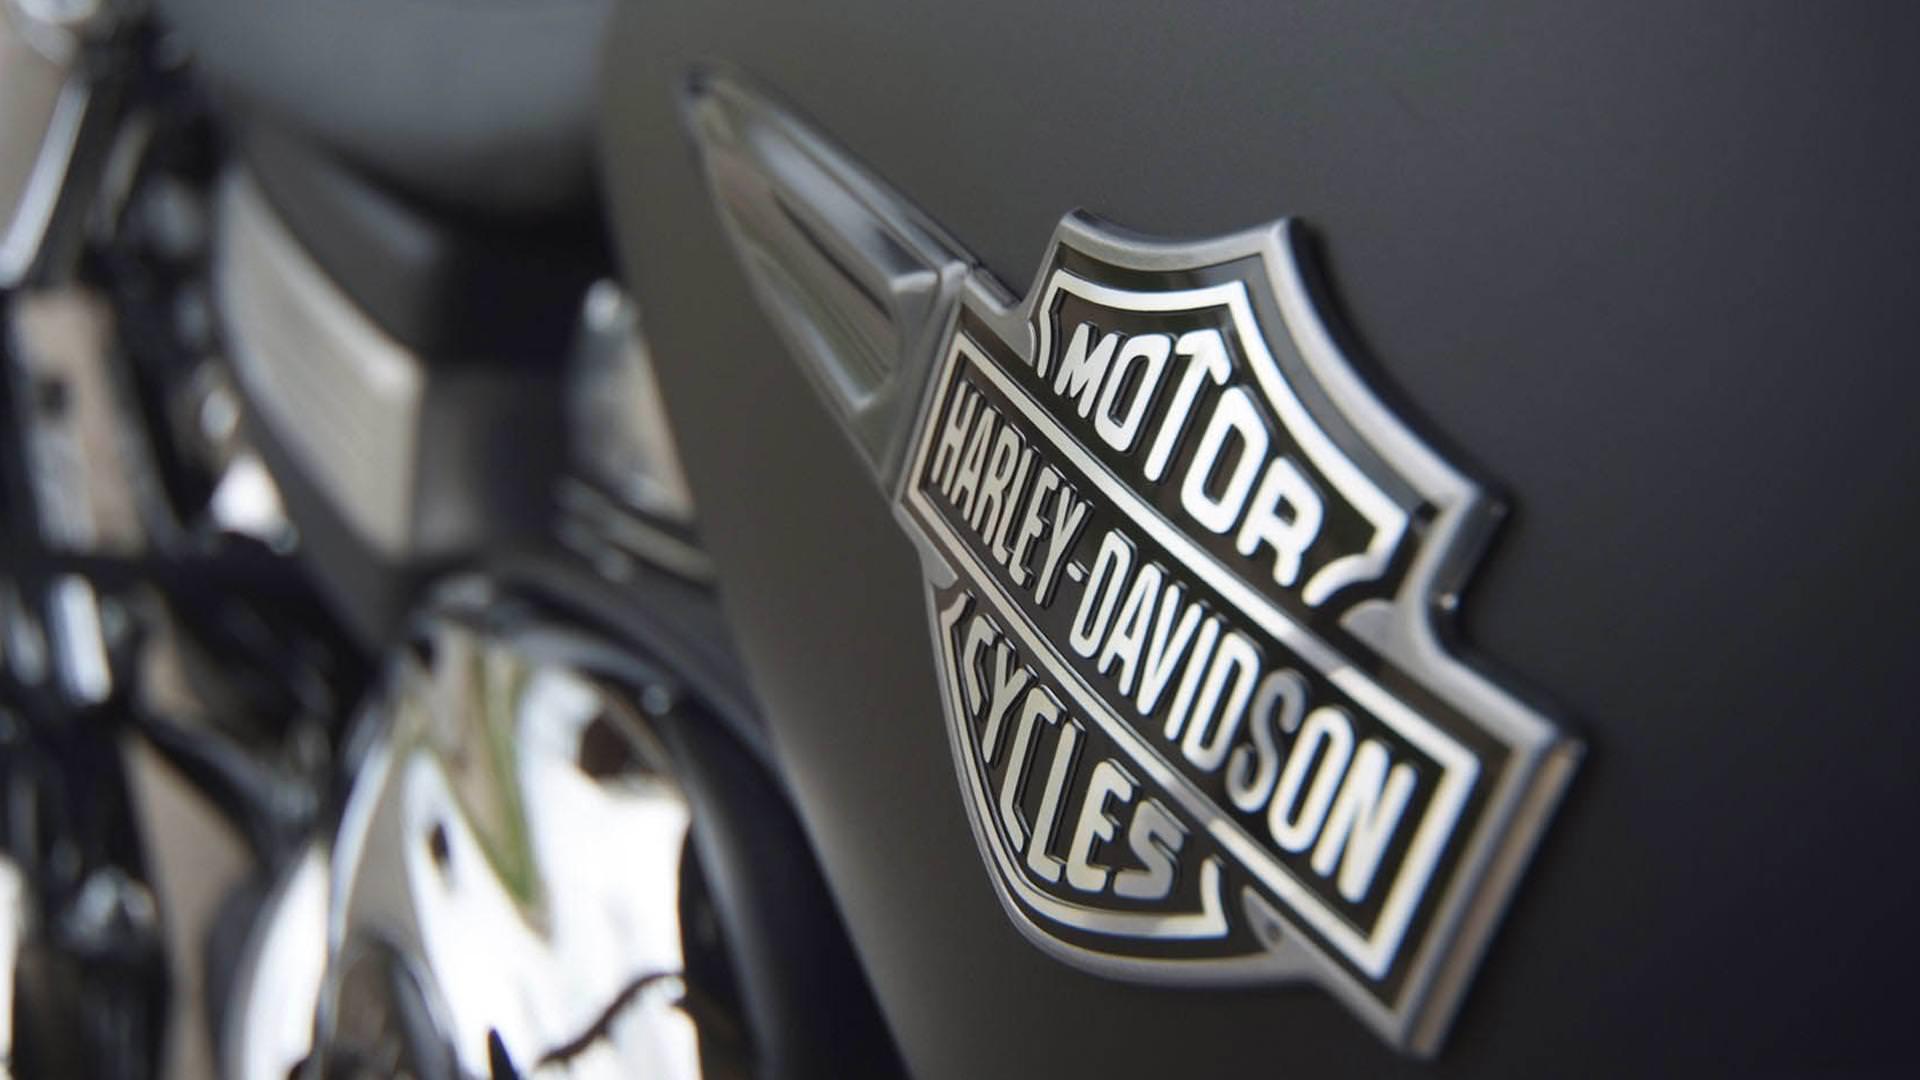 Harley Davidson Owners Club